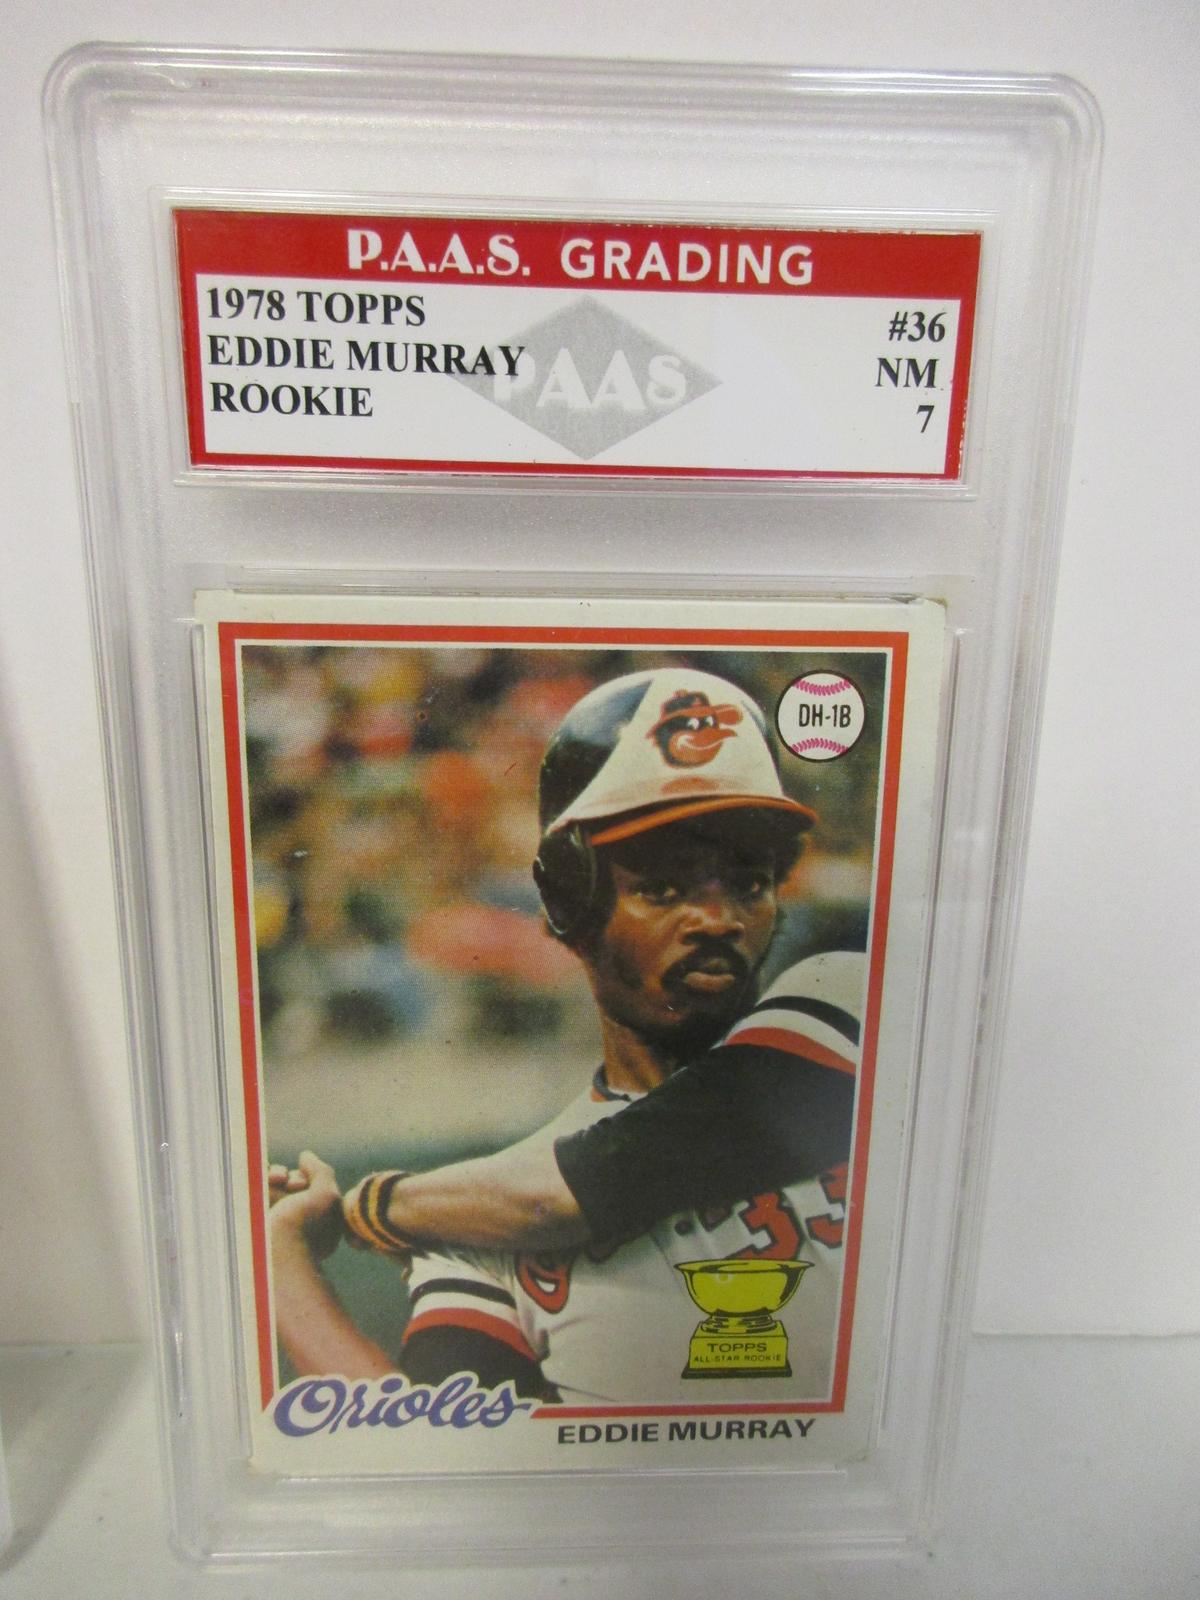 Eddie Murray Baltimore Orioles 1978 Topps ROOKIE #36 graded PAAS NM 7